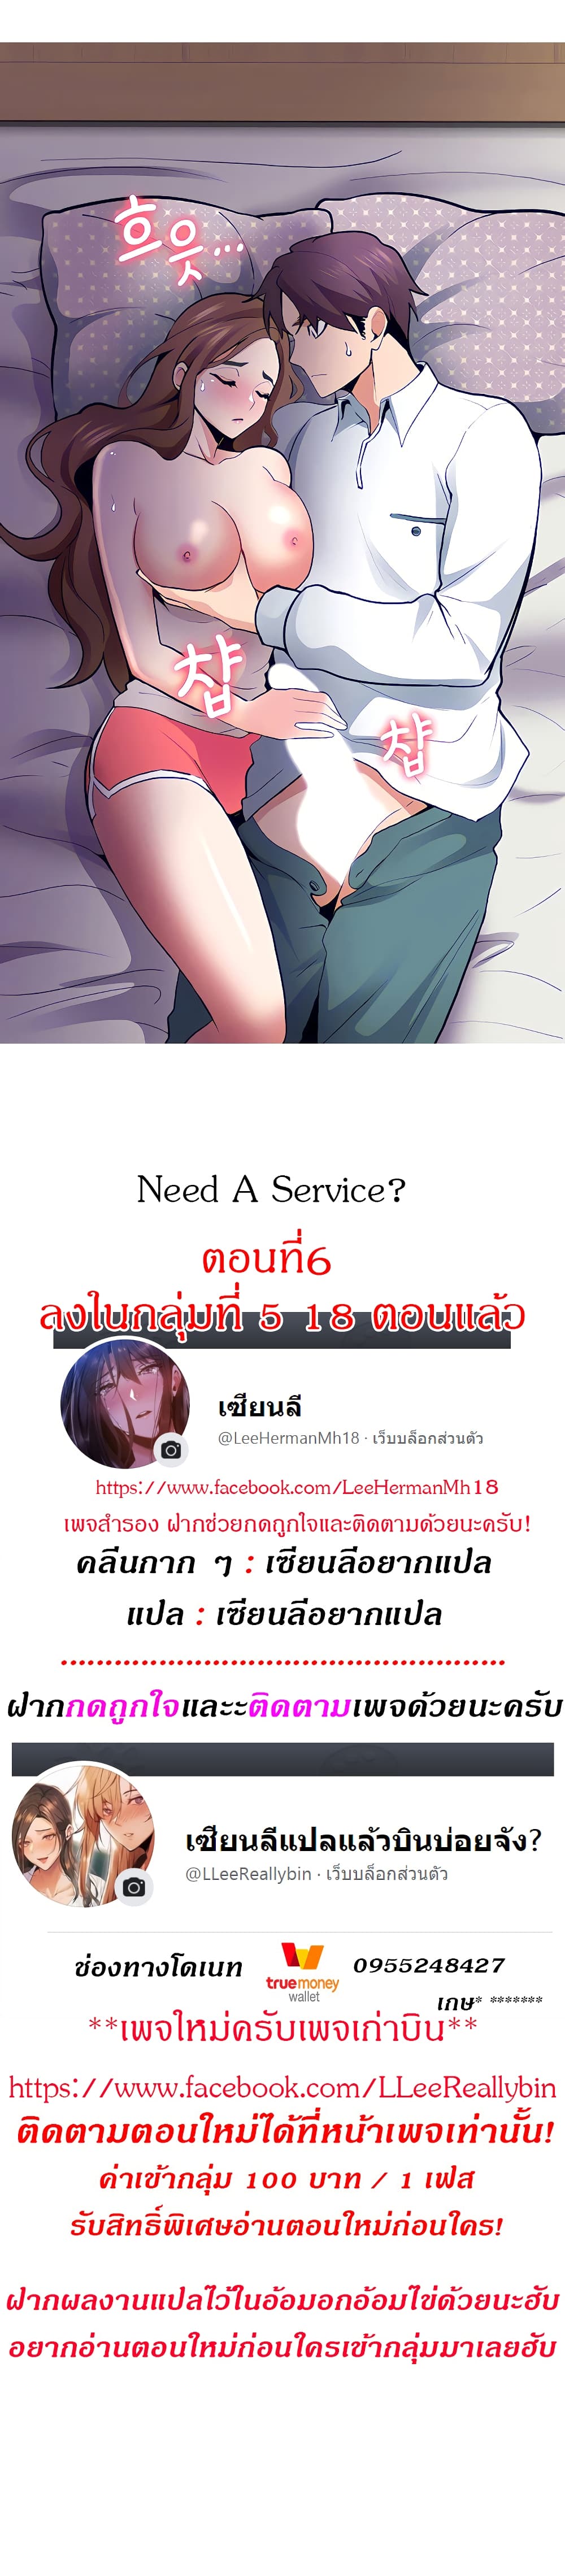 Need A Service 6 (1)